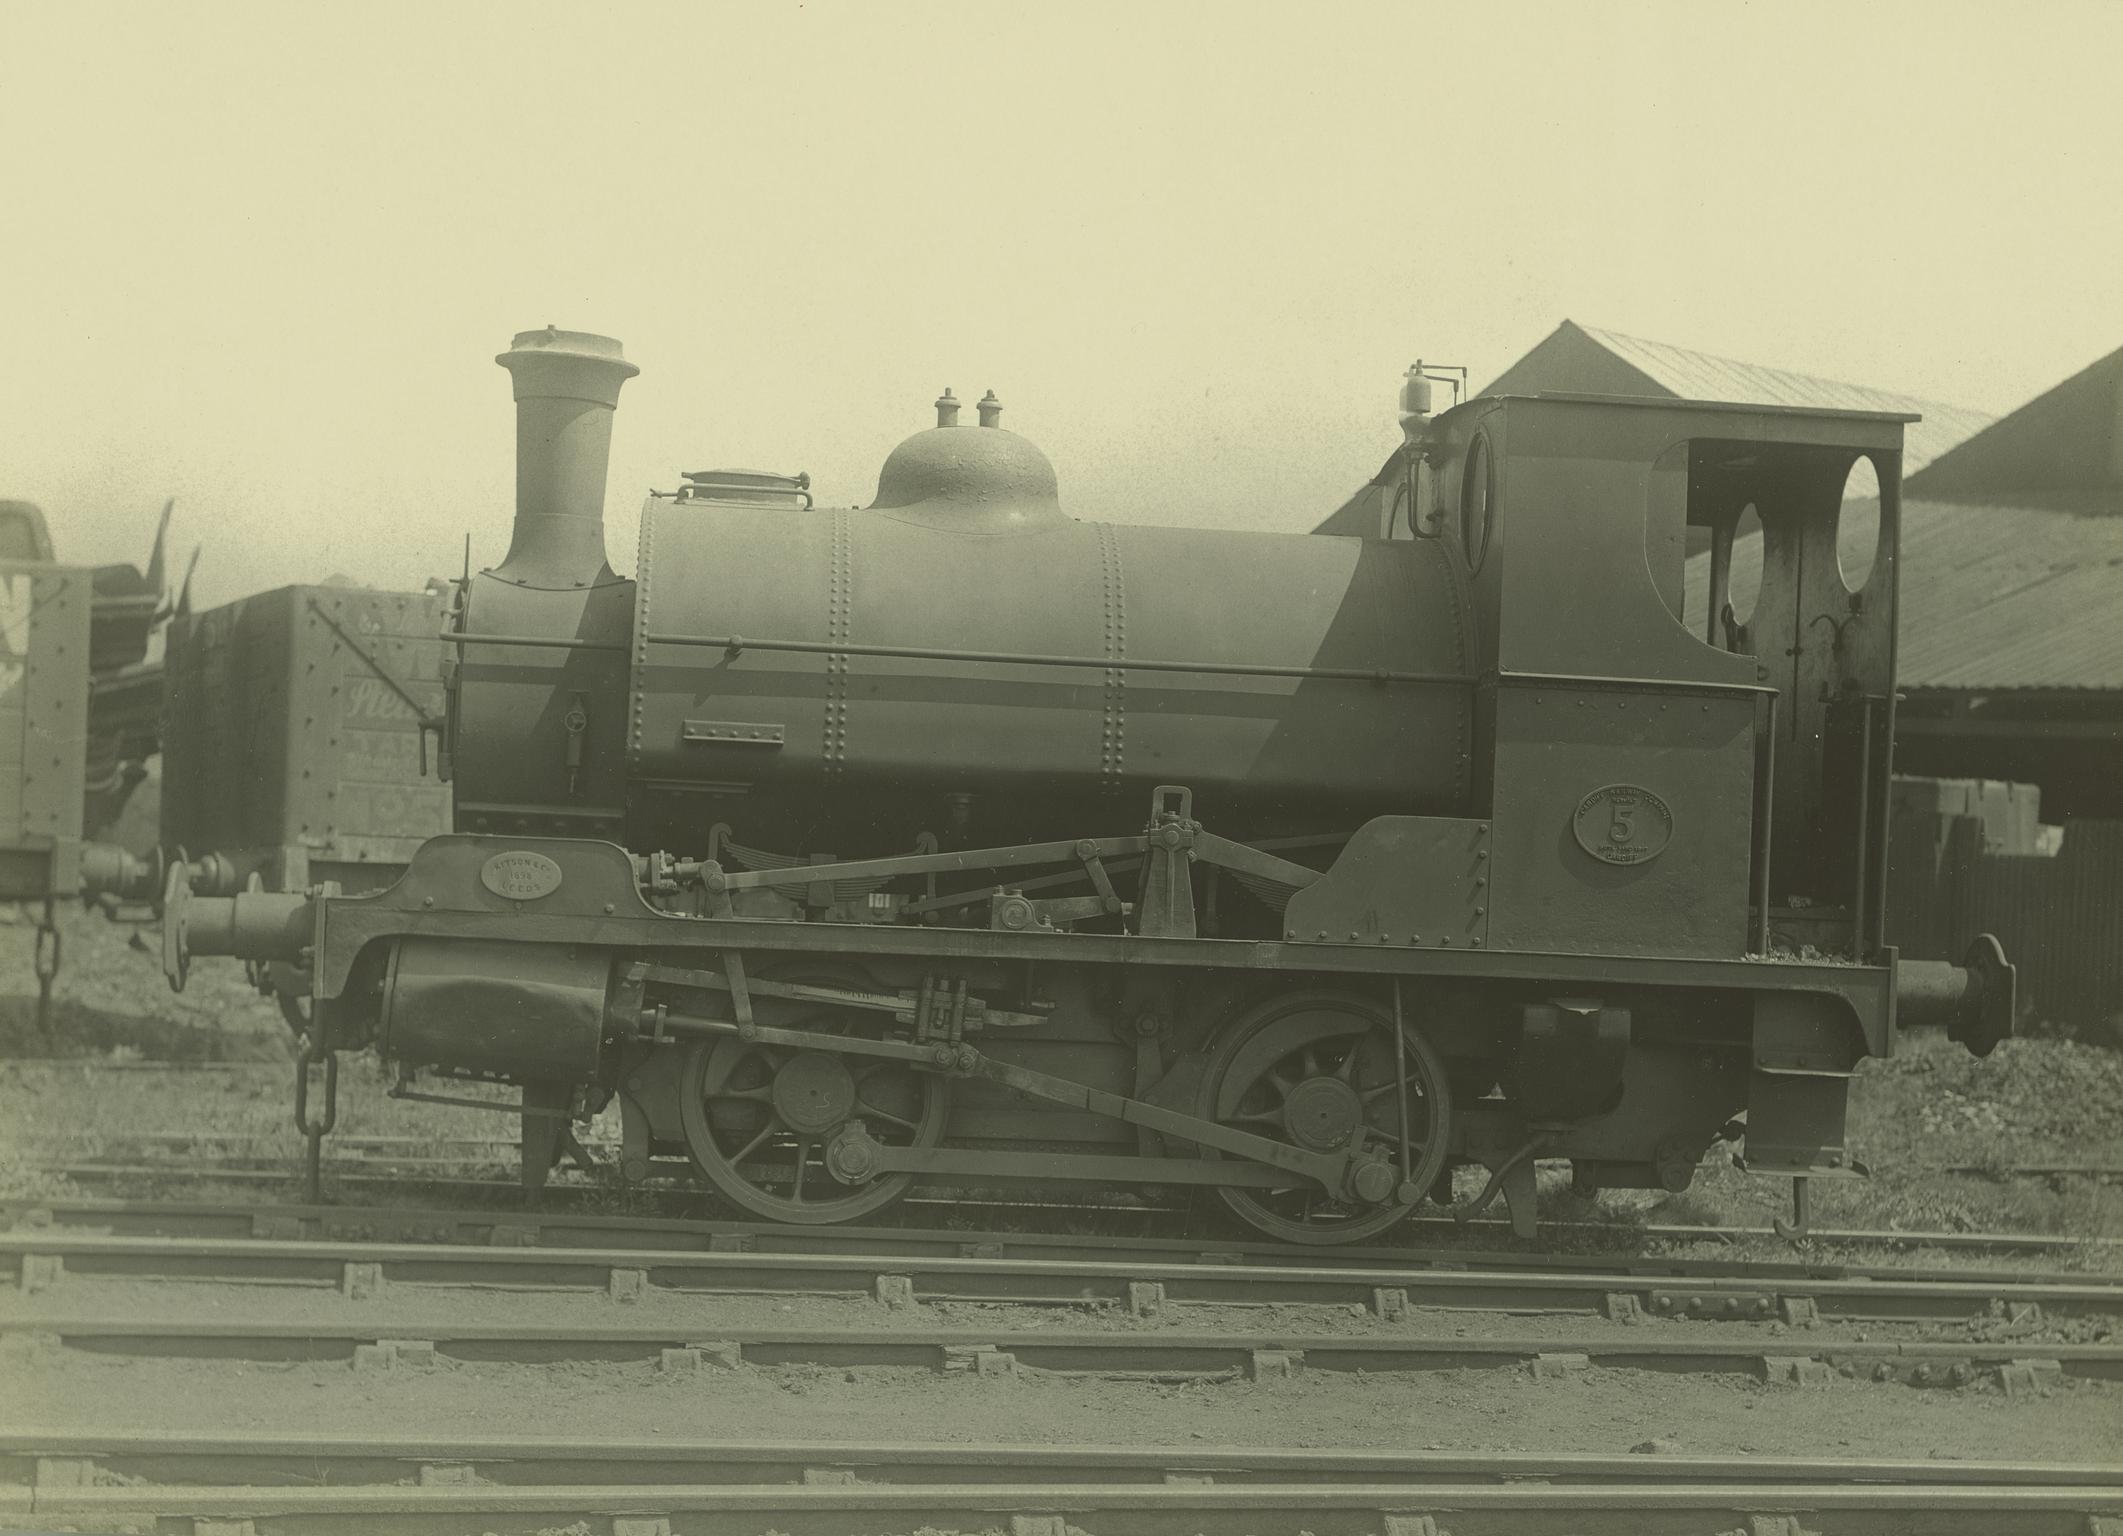 Cardiff Railway locomotive, photograph